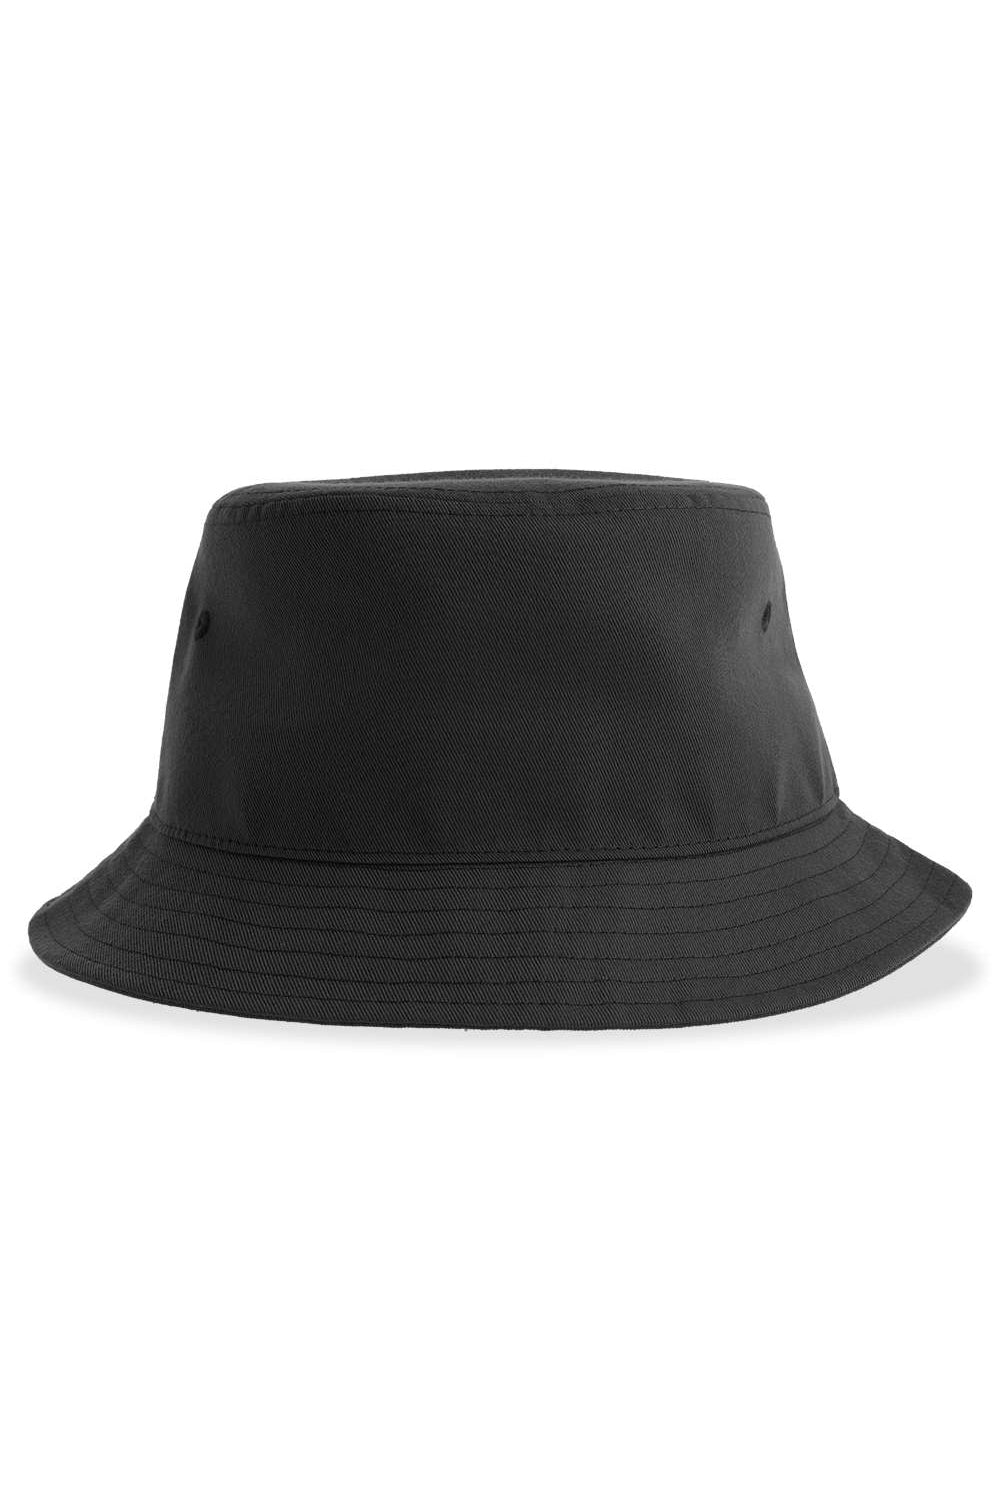 Atlantis Headwear GEO Mens Sustainable Bucket Hat Black Flat Front